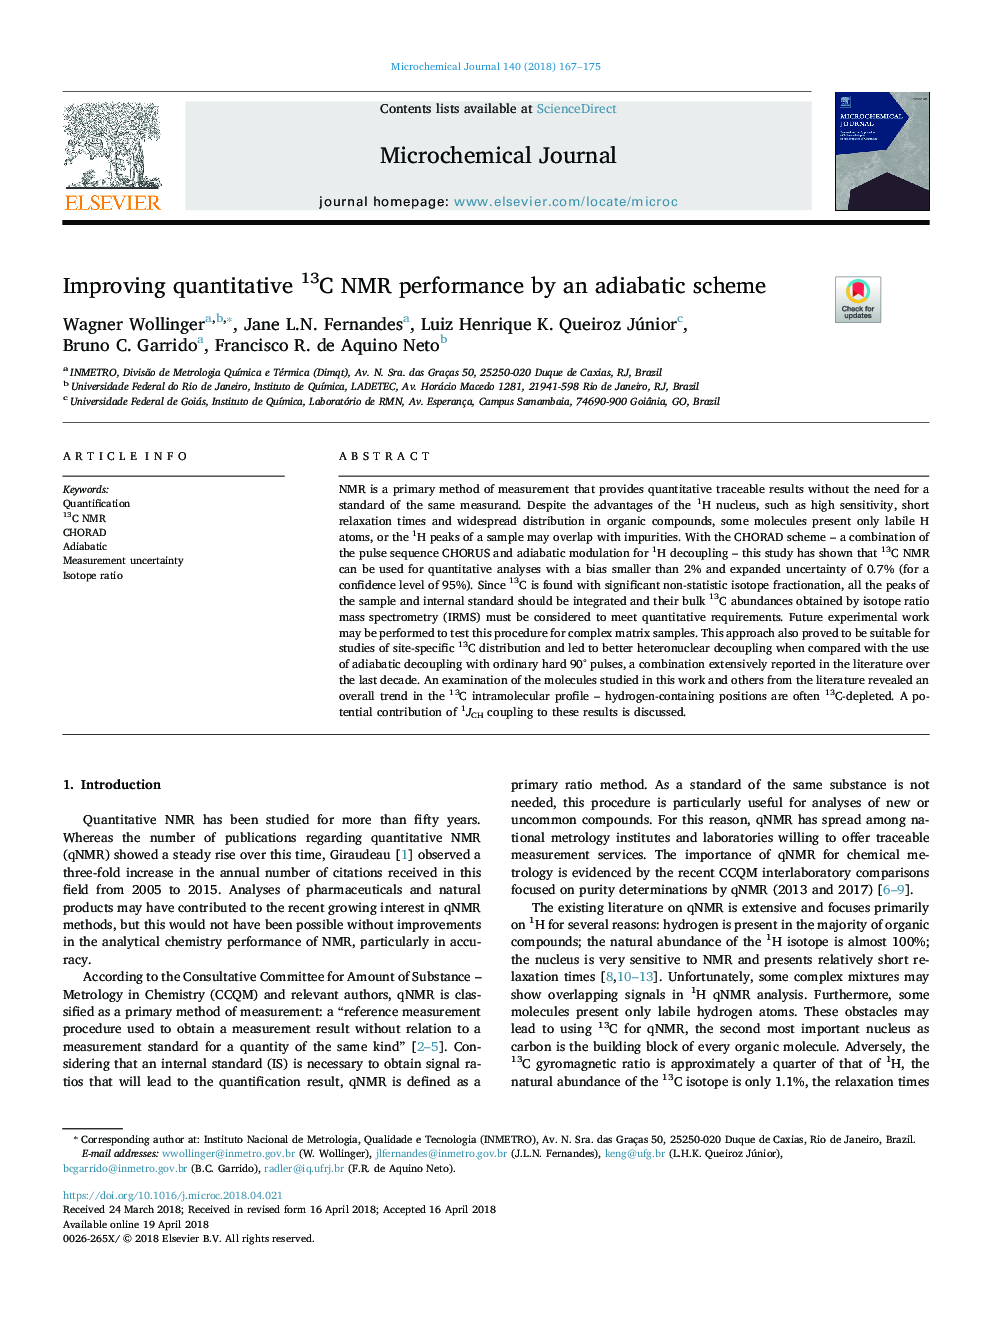 Improving quantitative 13C NMR performance by an adiabatic scheme